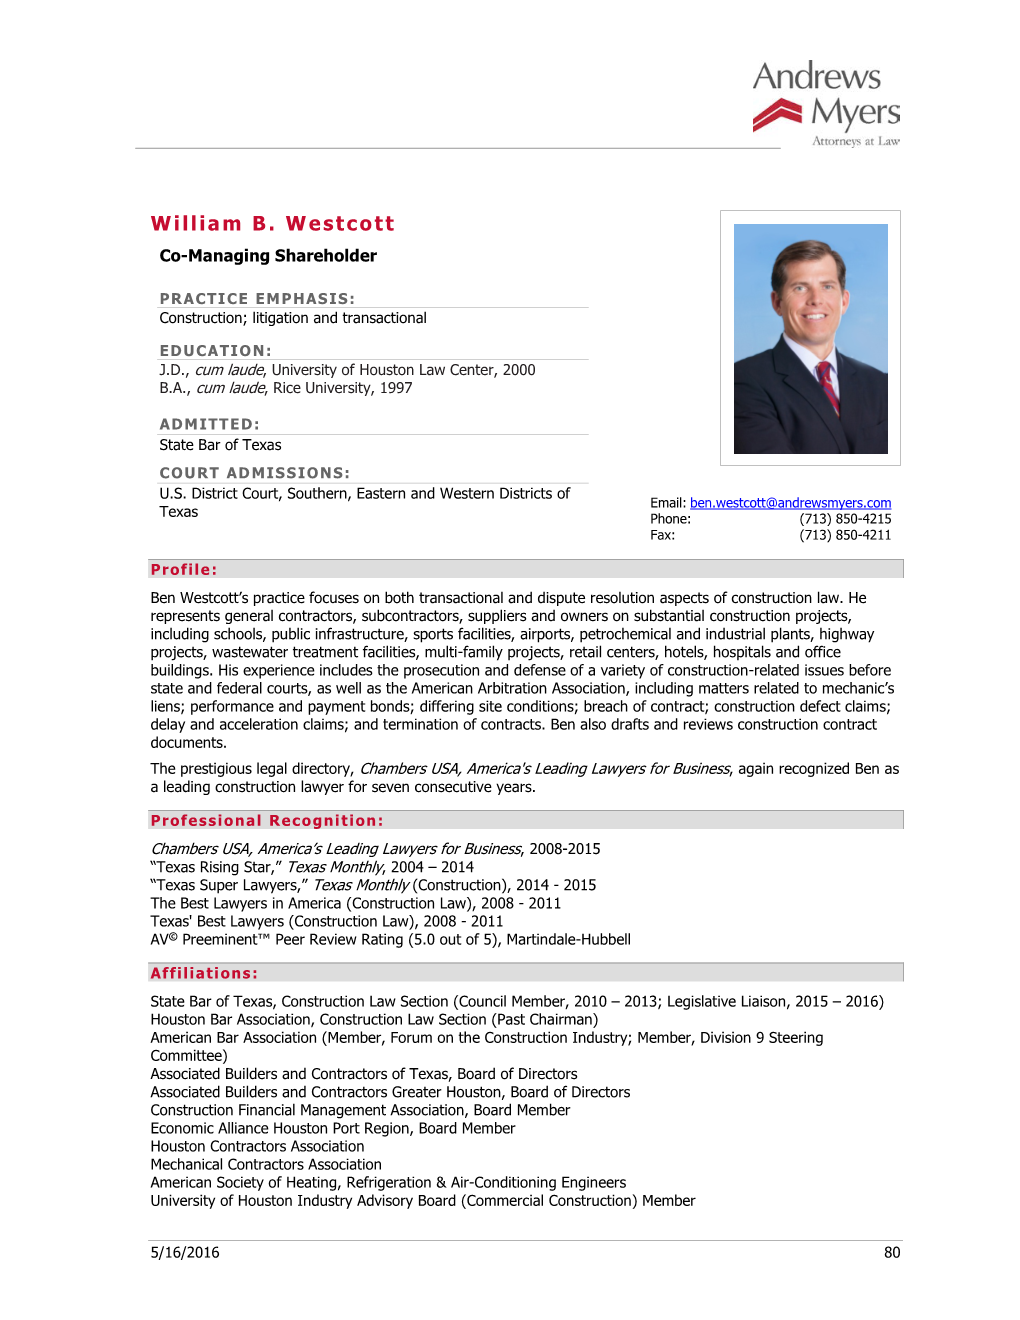 William B. Westcott Co-Managing Shareholder